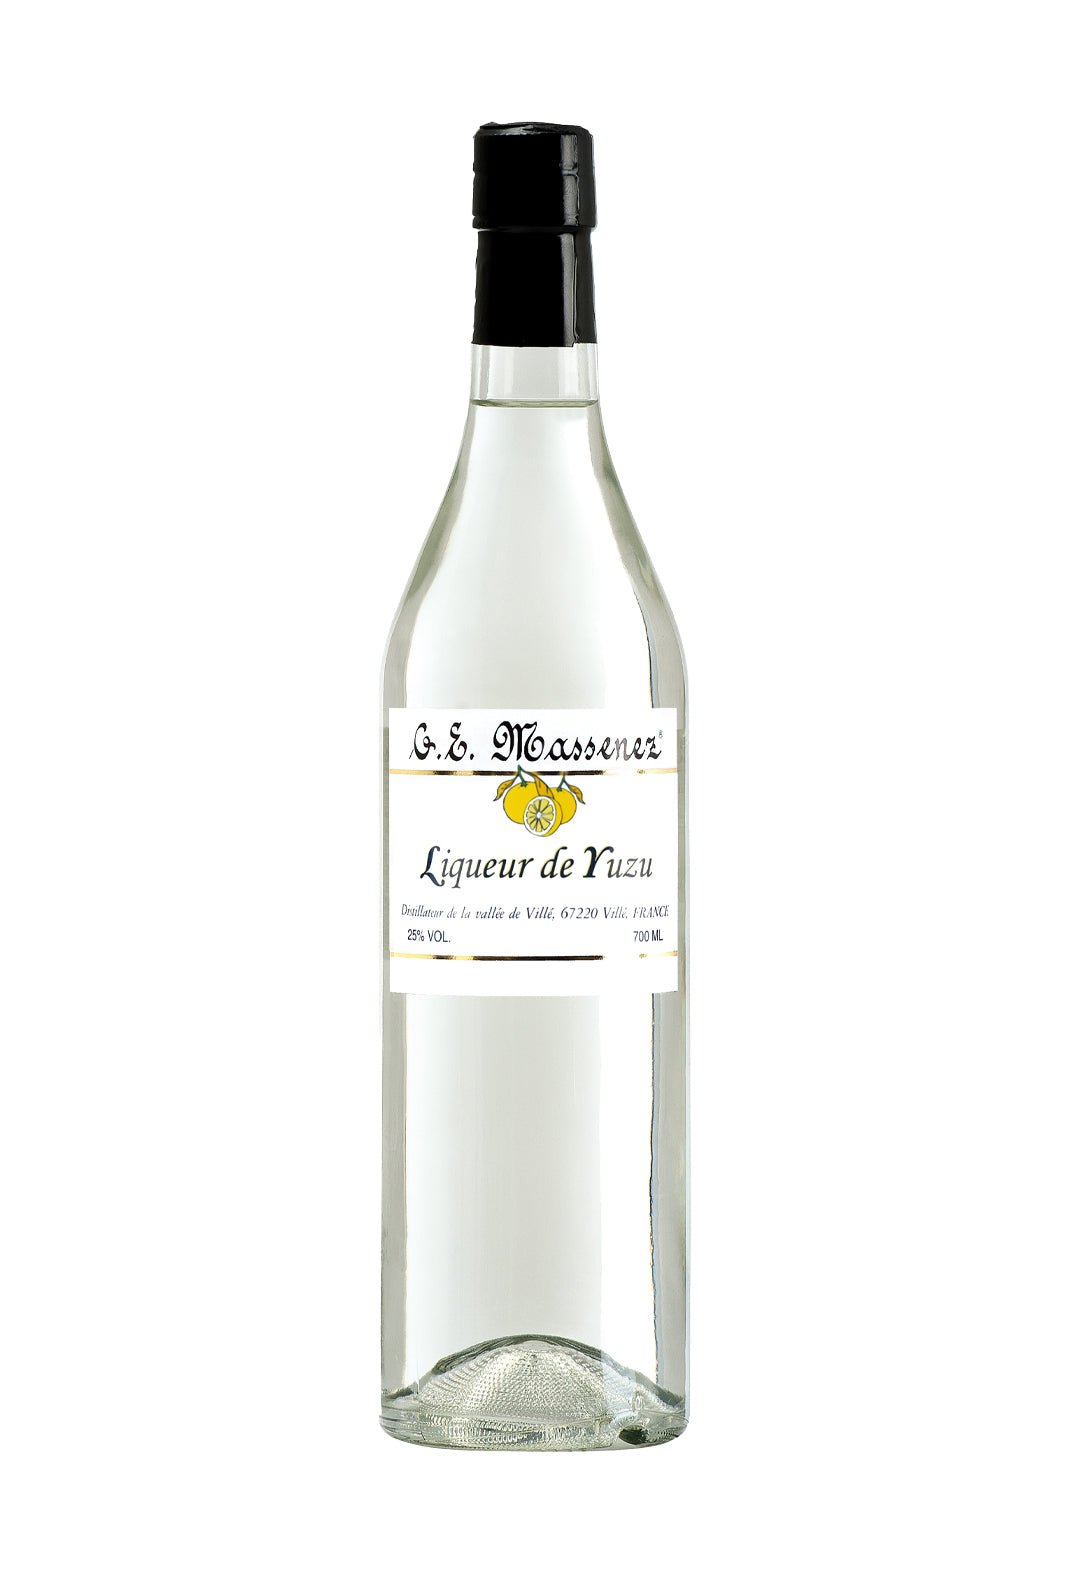 Massenez Yuzu Liqueur 25% 700ml | Liqueurs | Shop online at Spirits of France